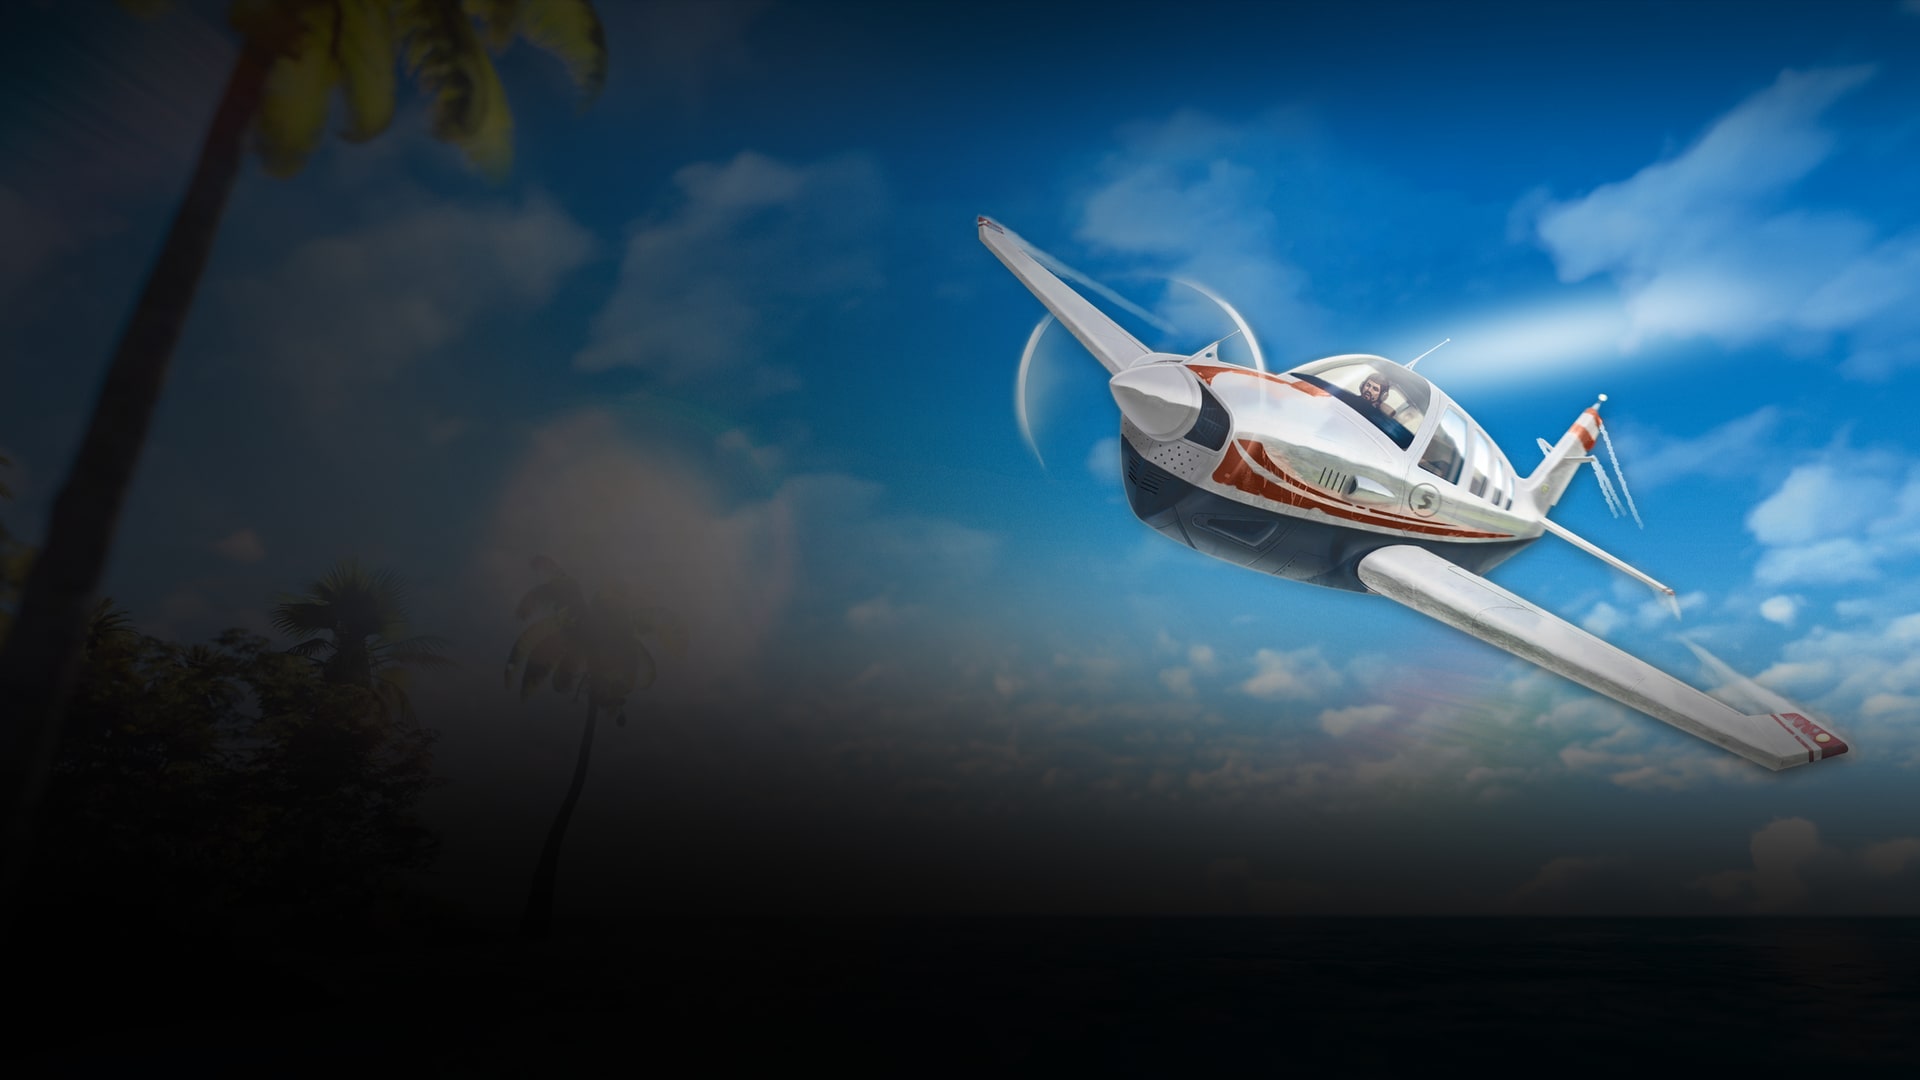 Island Flight Simulator Sony PlayStation 4 PS4 Game NEW